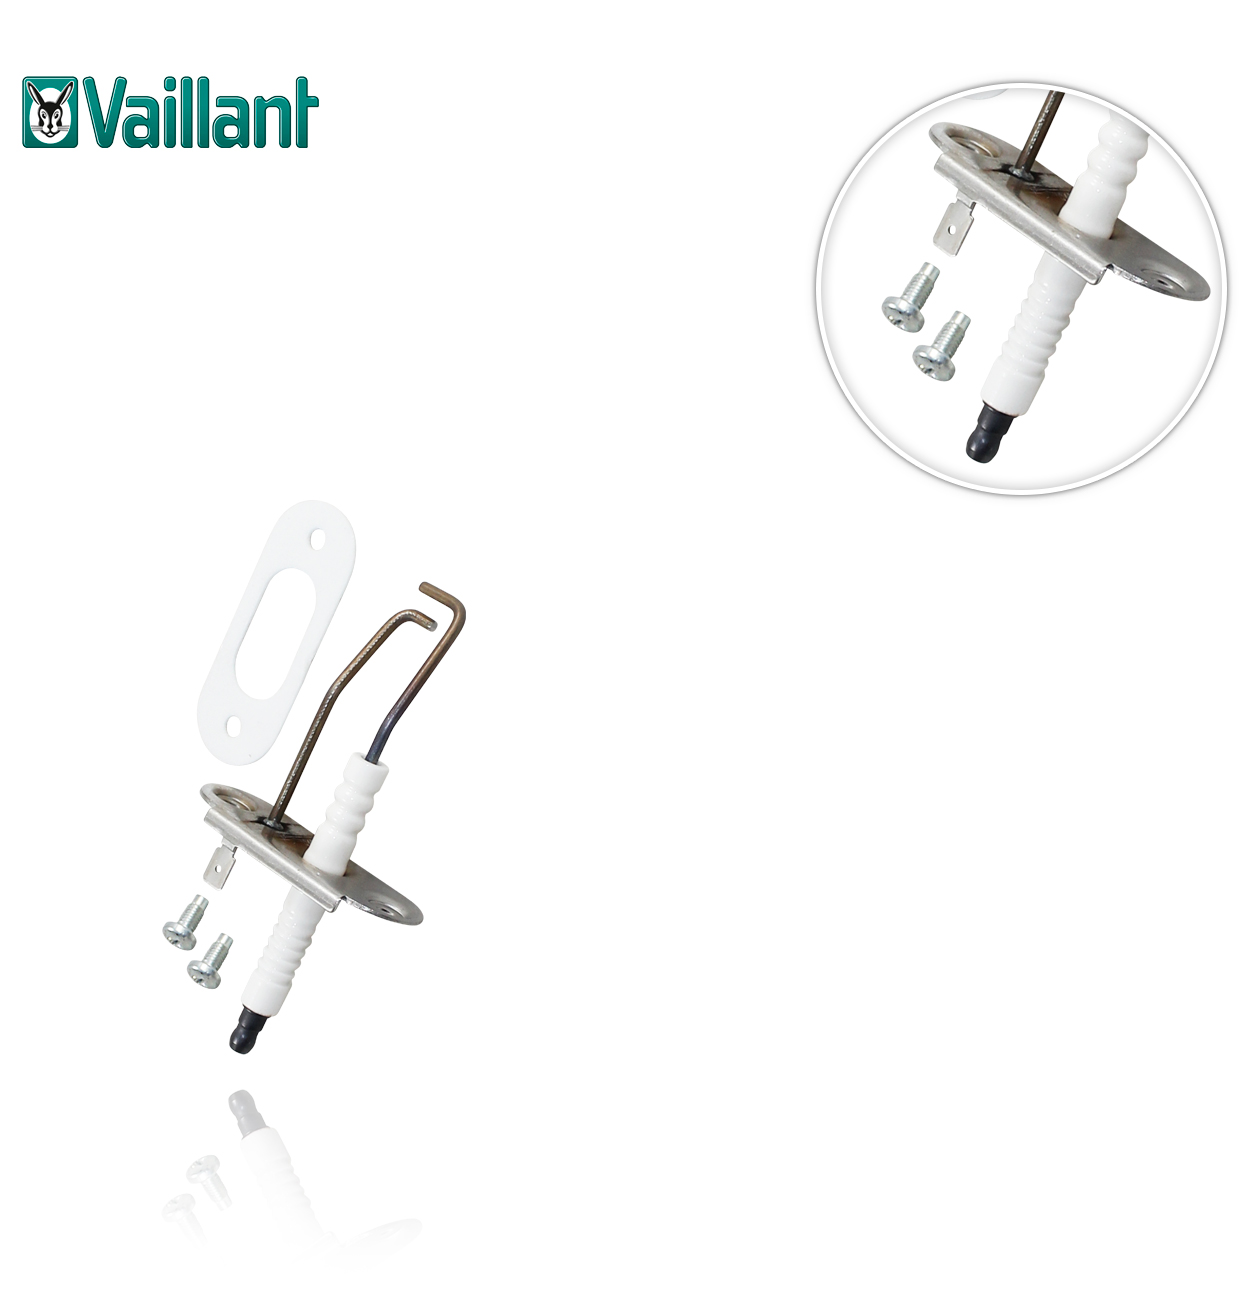 ELECTRODO VC/ VM/ VMW  VAILLANT 0020133816